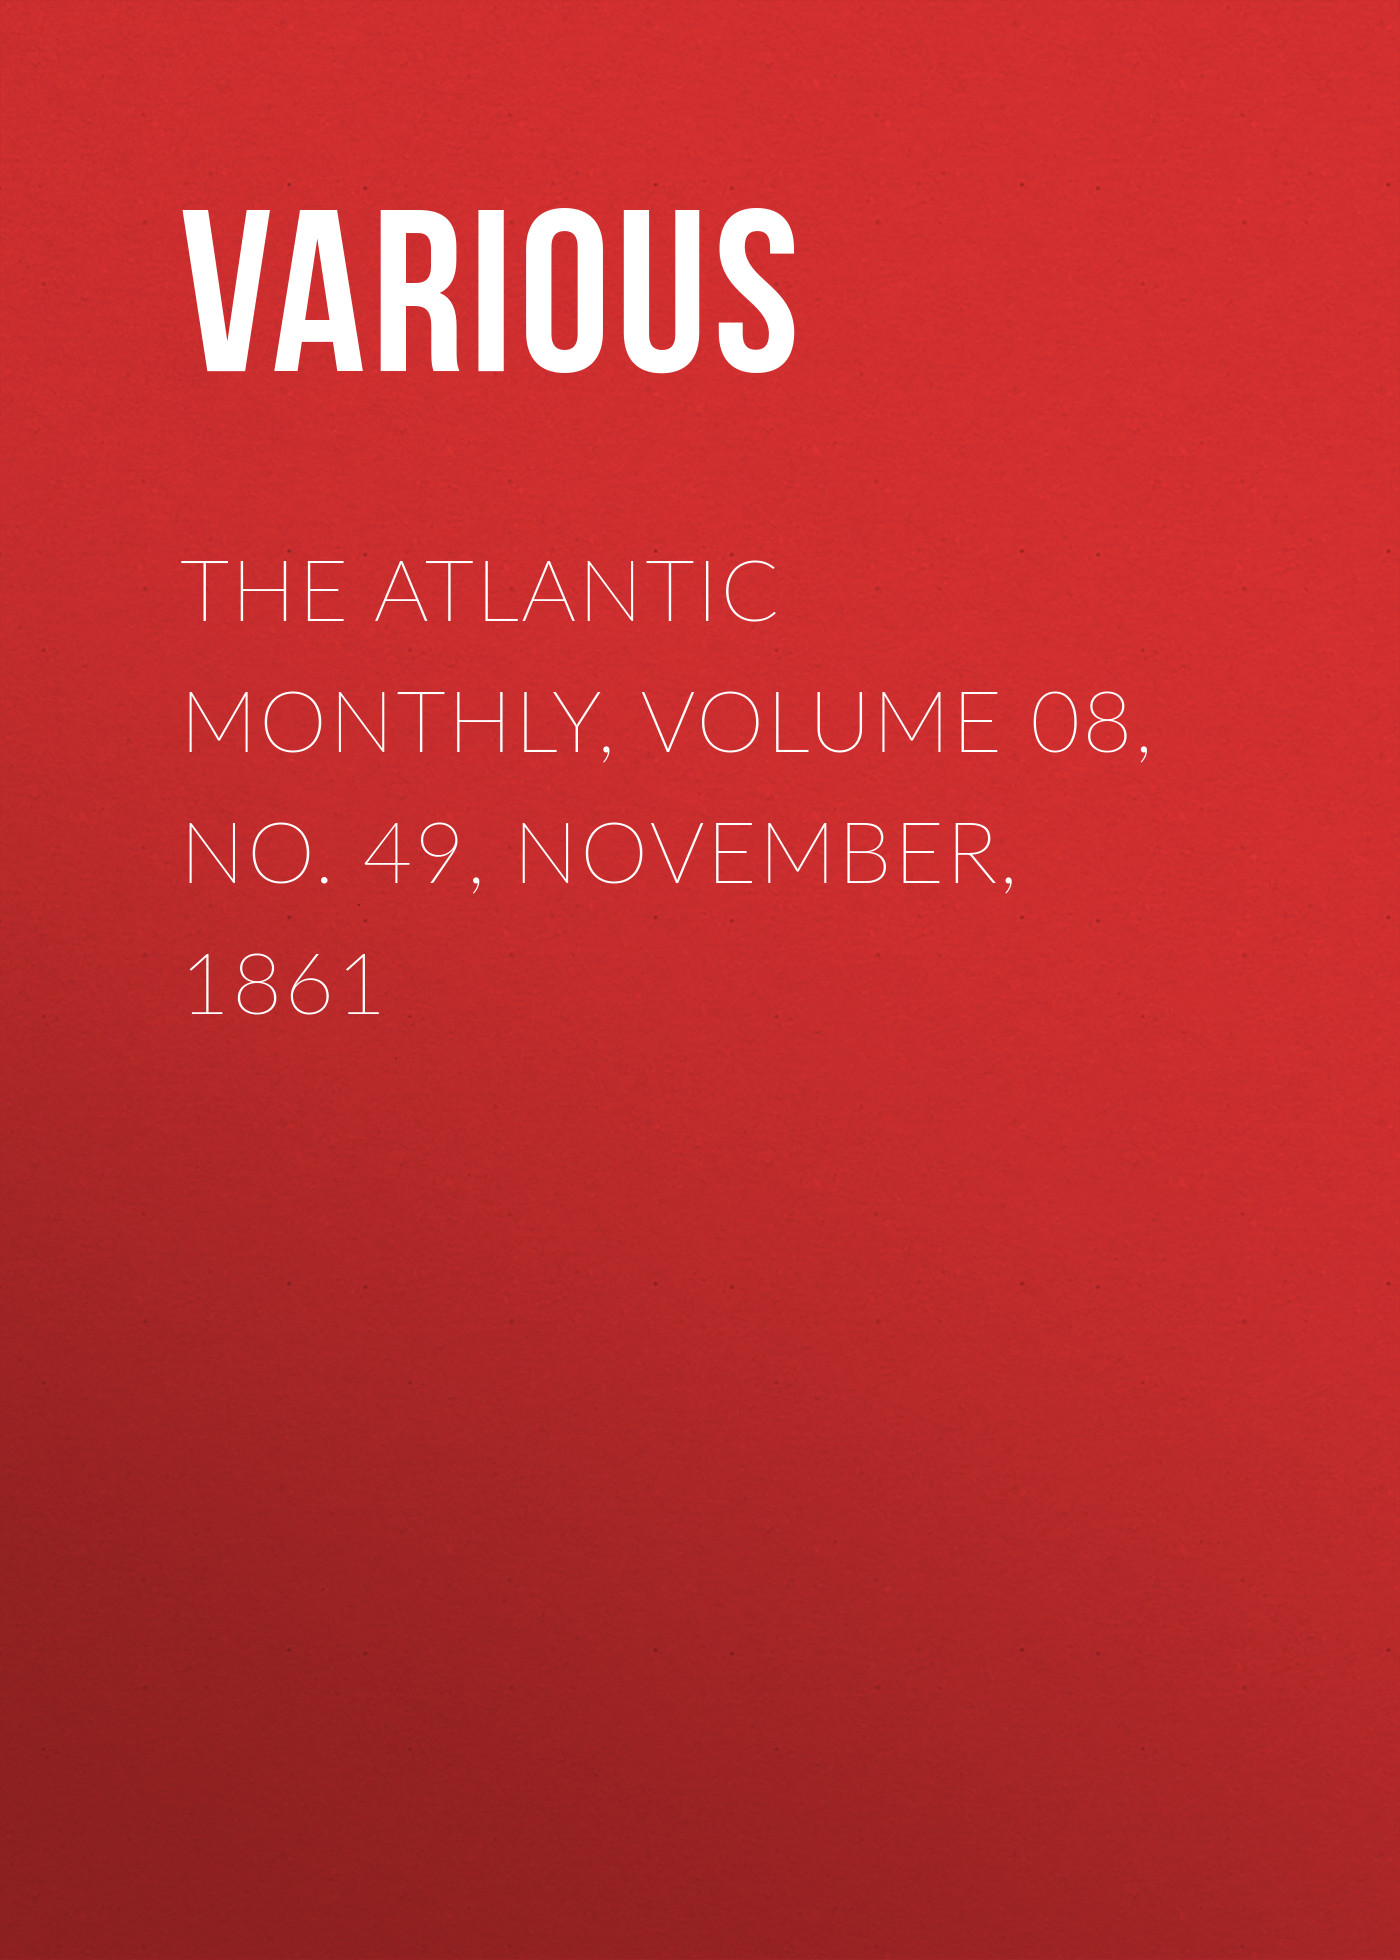 The Atlantic Monthly, Volume 08, No. 49, November, 1861